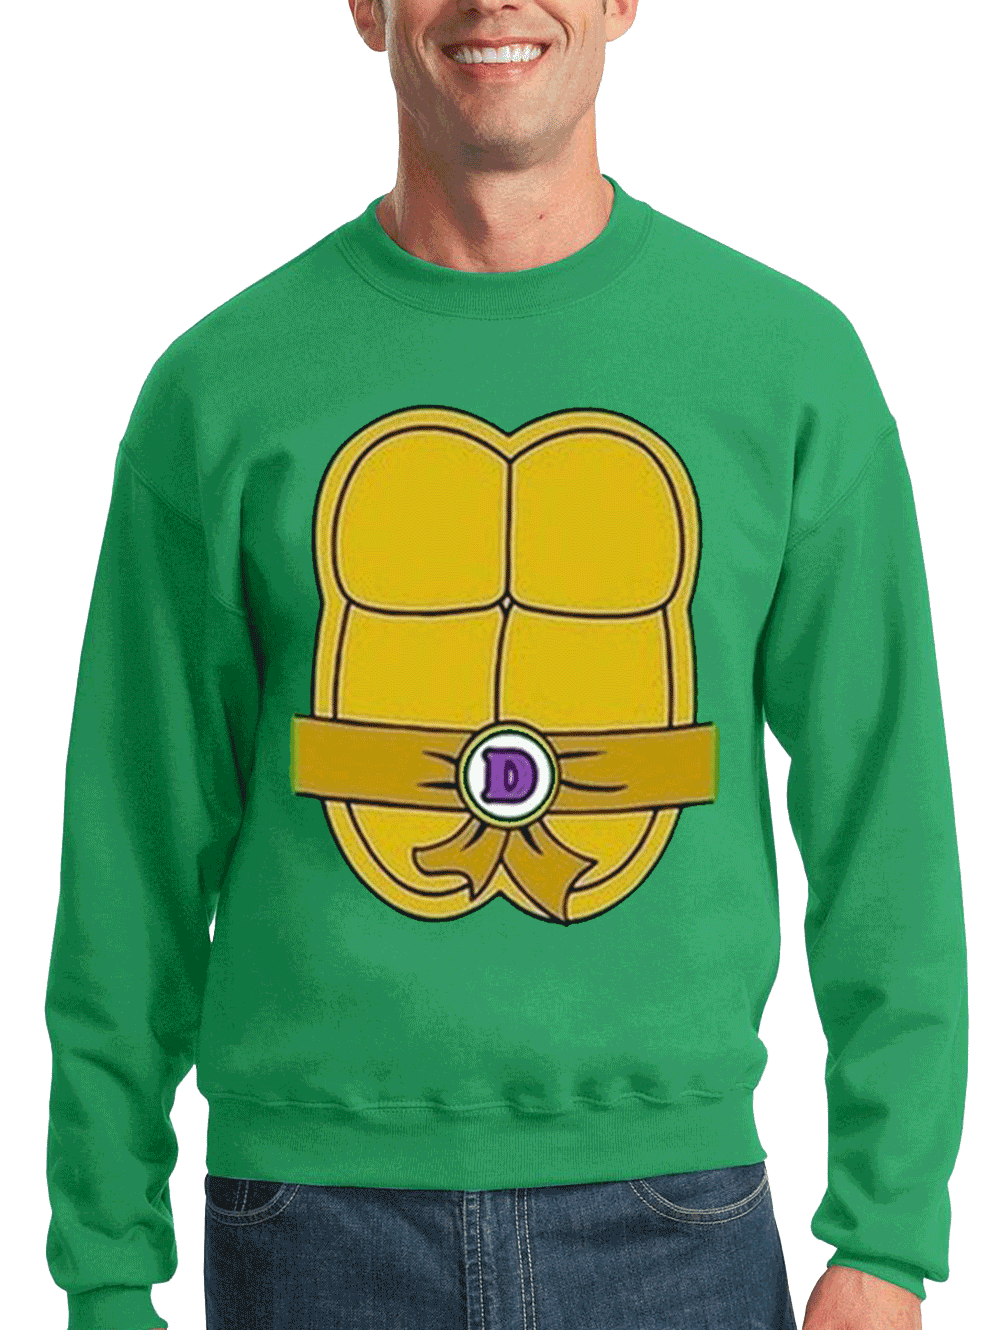 Turtle Costume with Letter Buckle Crewneck Sweatshirt